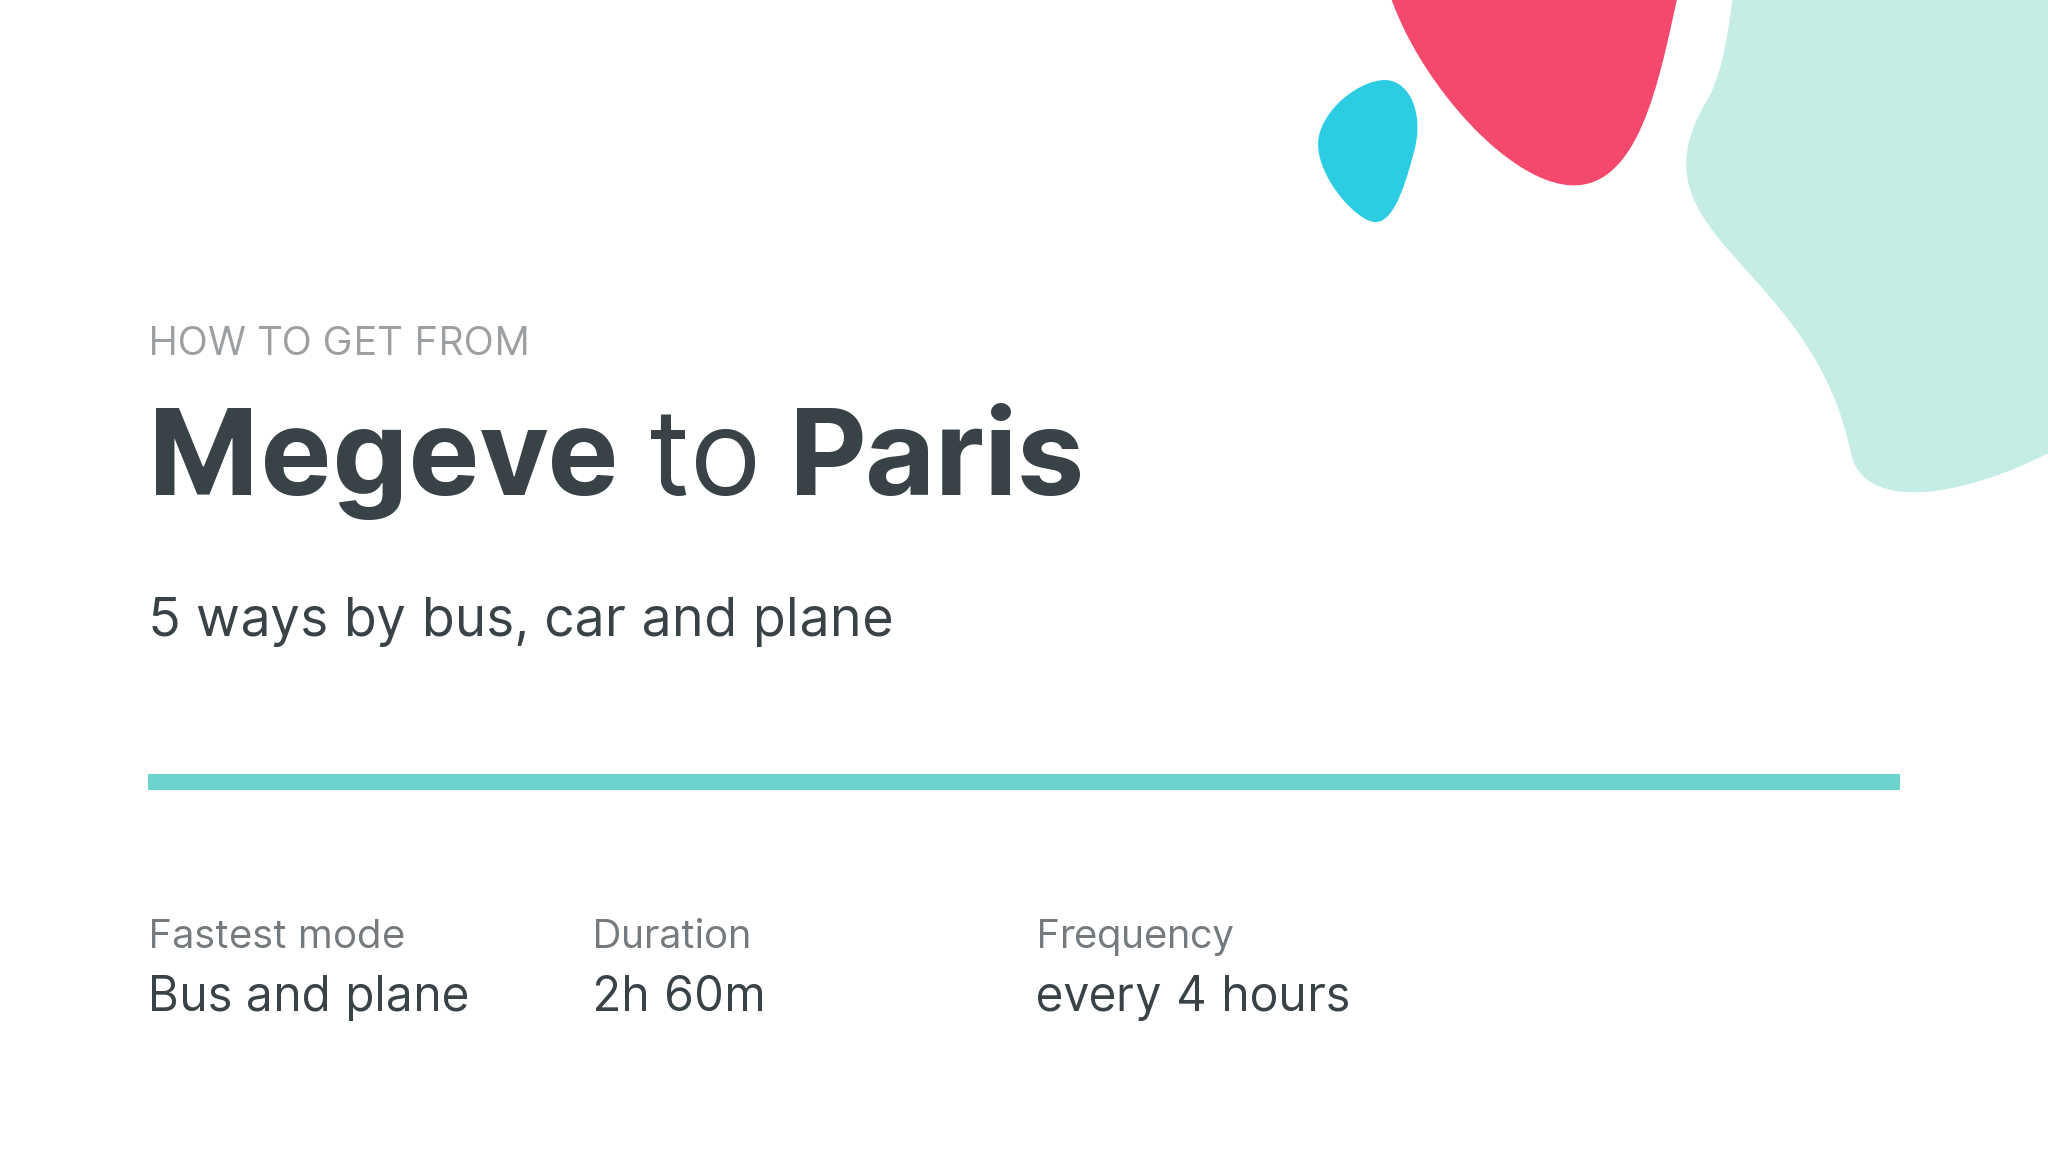 How do I get from Megeve to Paris